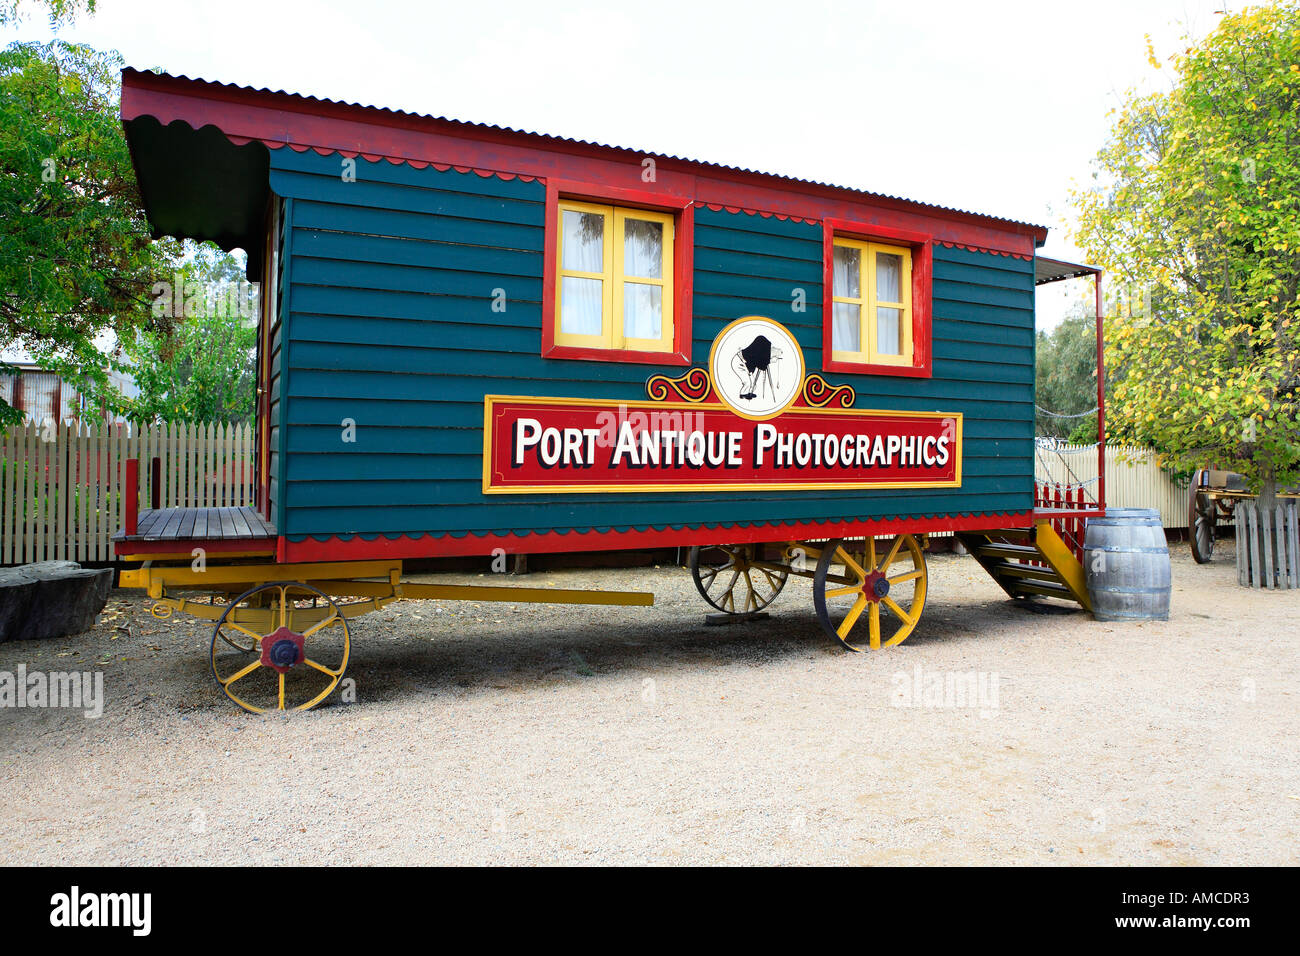 Port antique photographics, red and blue wagon on yellow wheels, Murray Esplanade, Echuca, Victoria, Australia Stock Photo